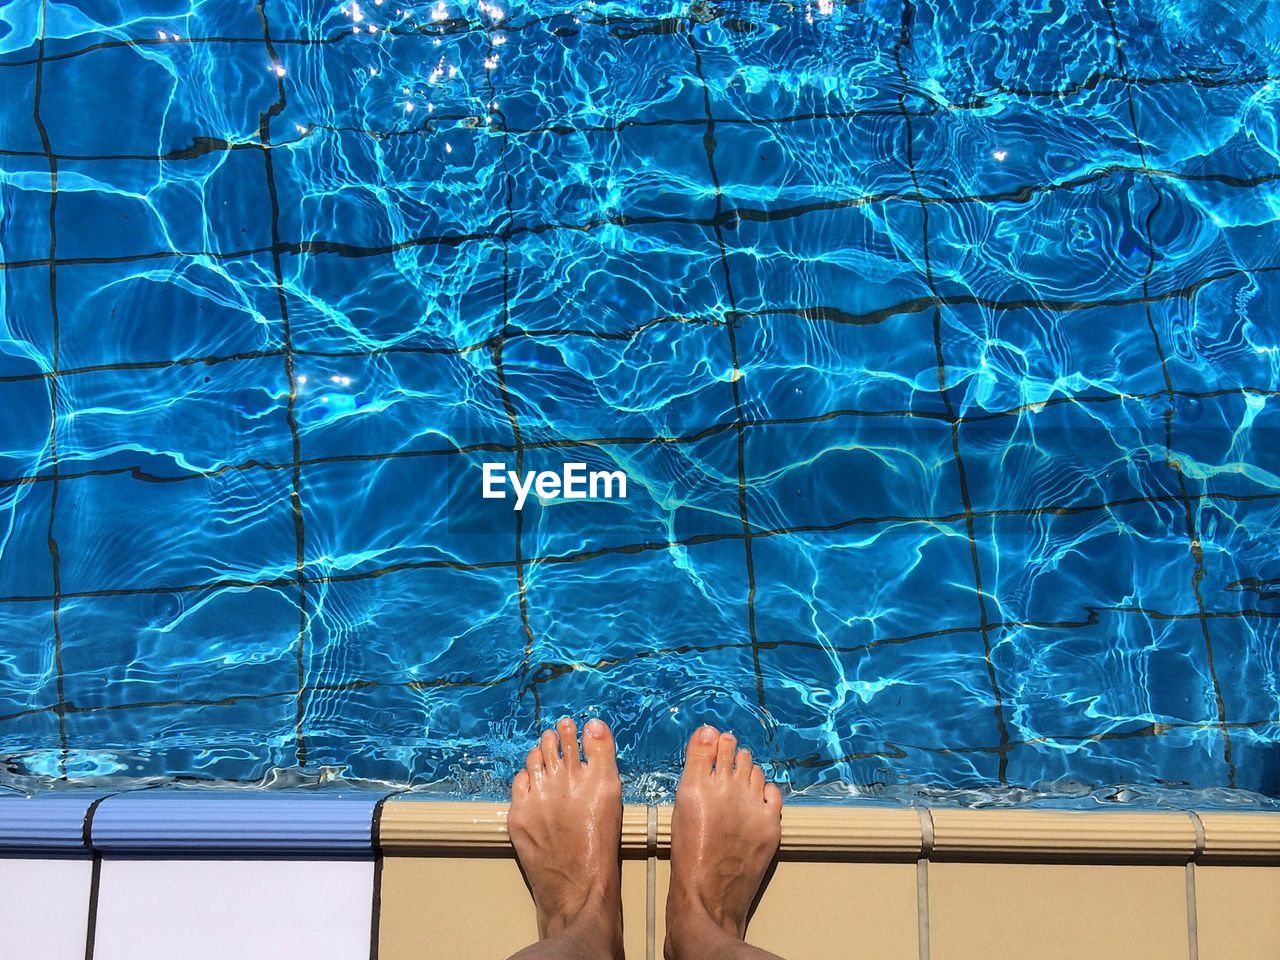 Man's feet standing on edge of swimming pool